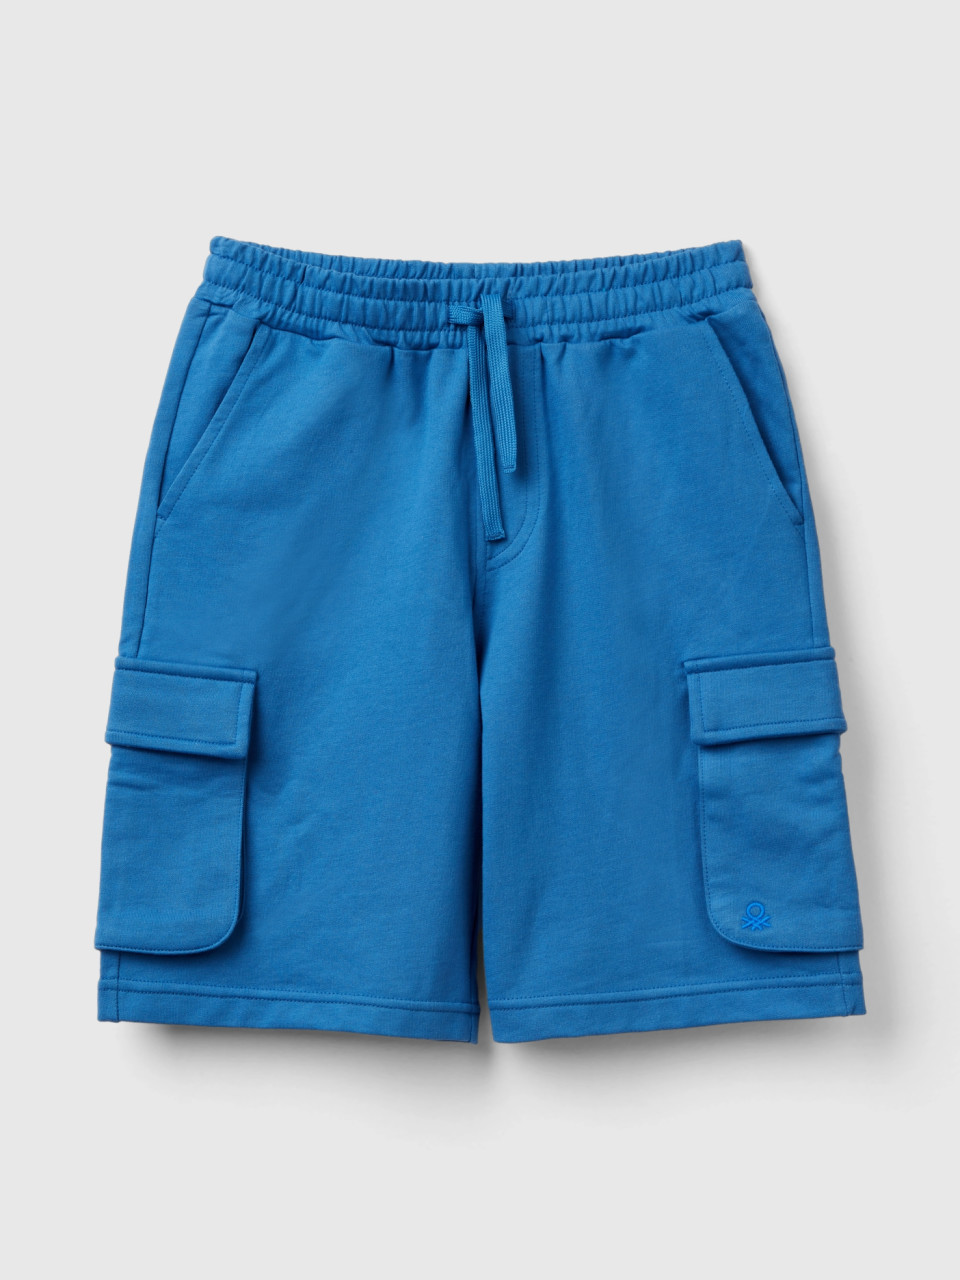 Benetton, Cargo Shorts In Light Sweat Fabric, Blue, Kids